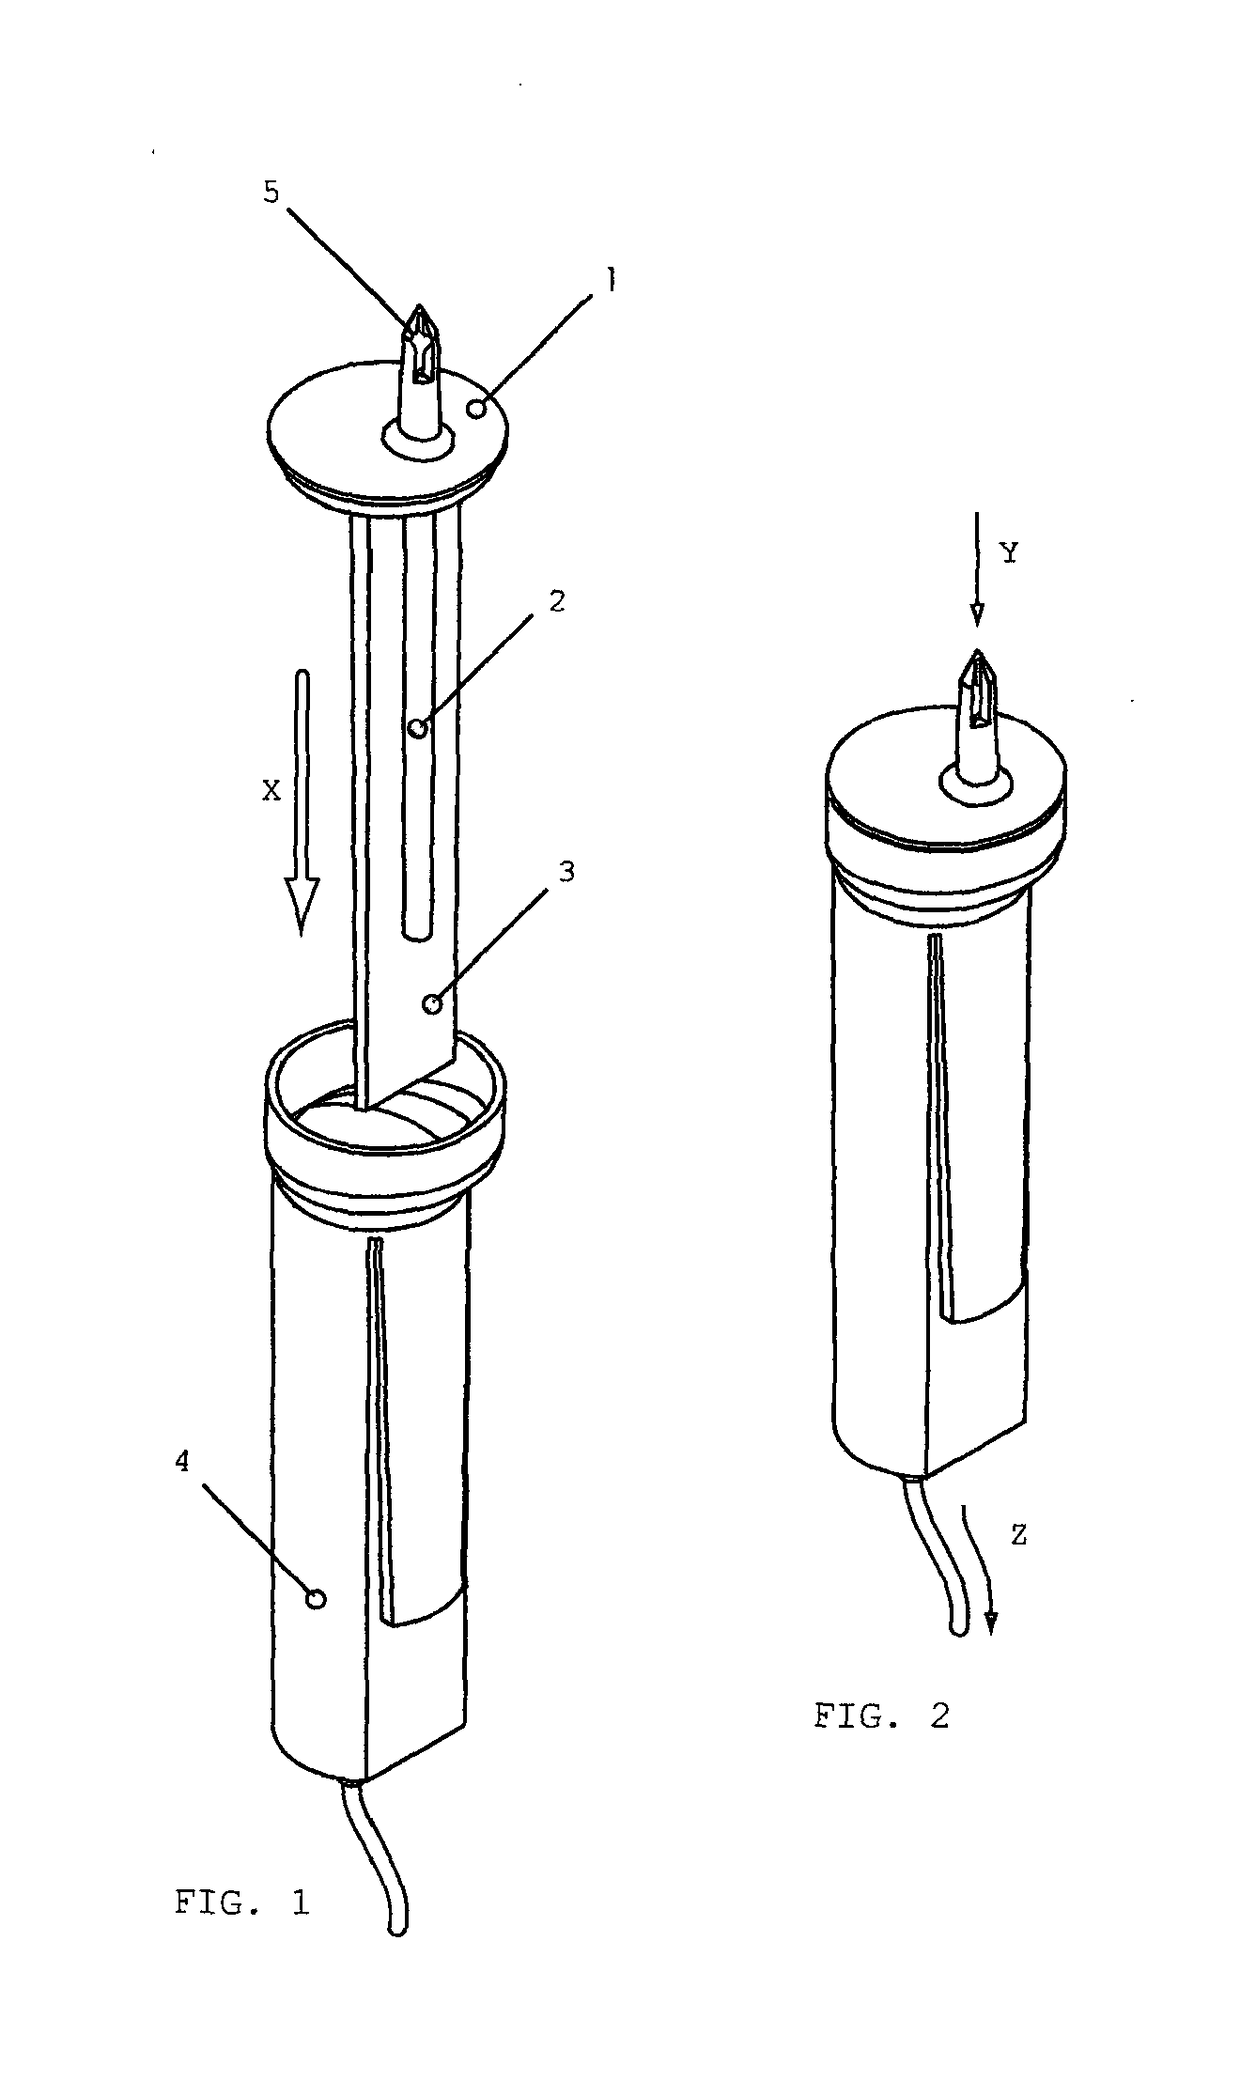 Flow meter for intravenous liquids